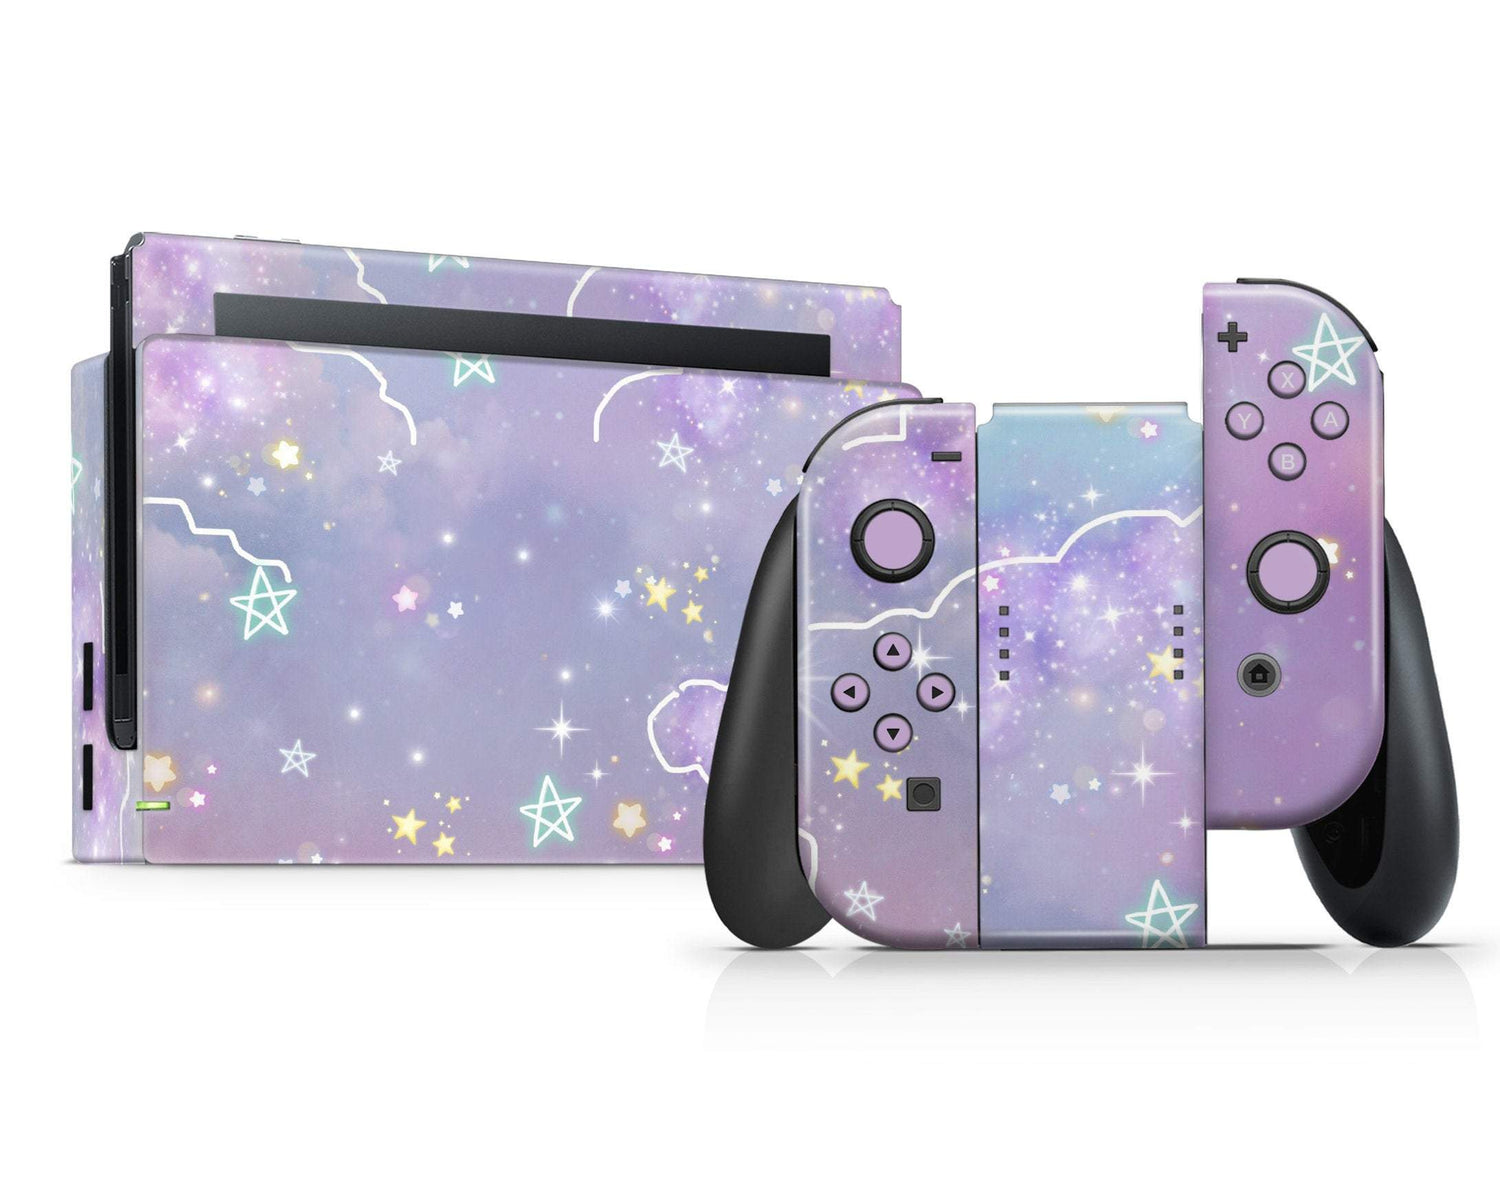 Lux Skins Nintendo Switch Pastel Purple Galaxy Full Set Skins - Pattern Galaxy Skin